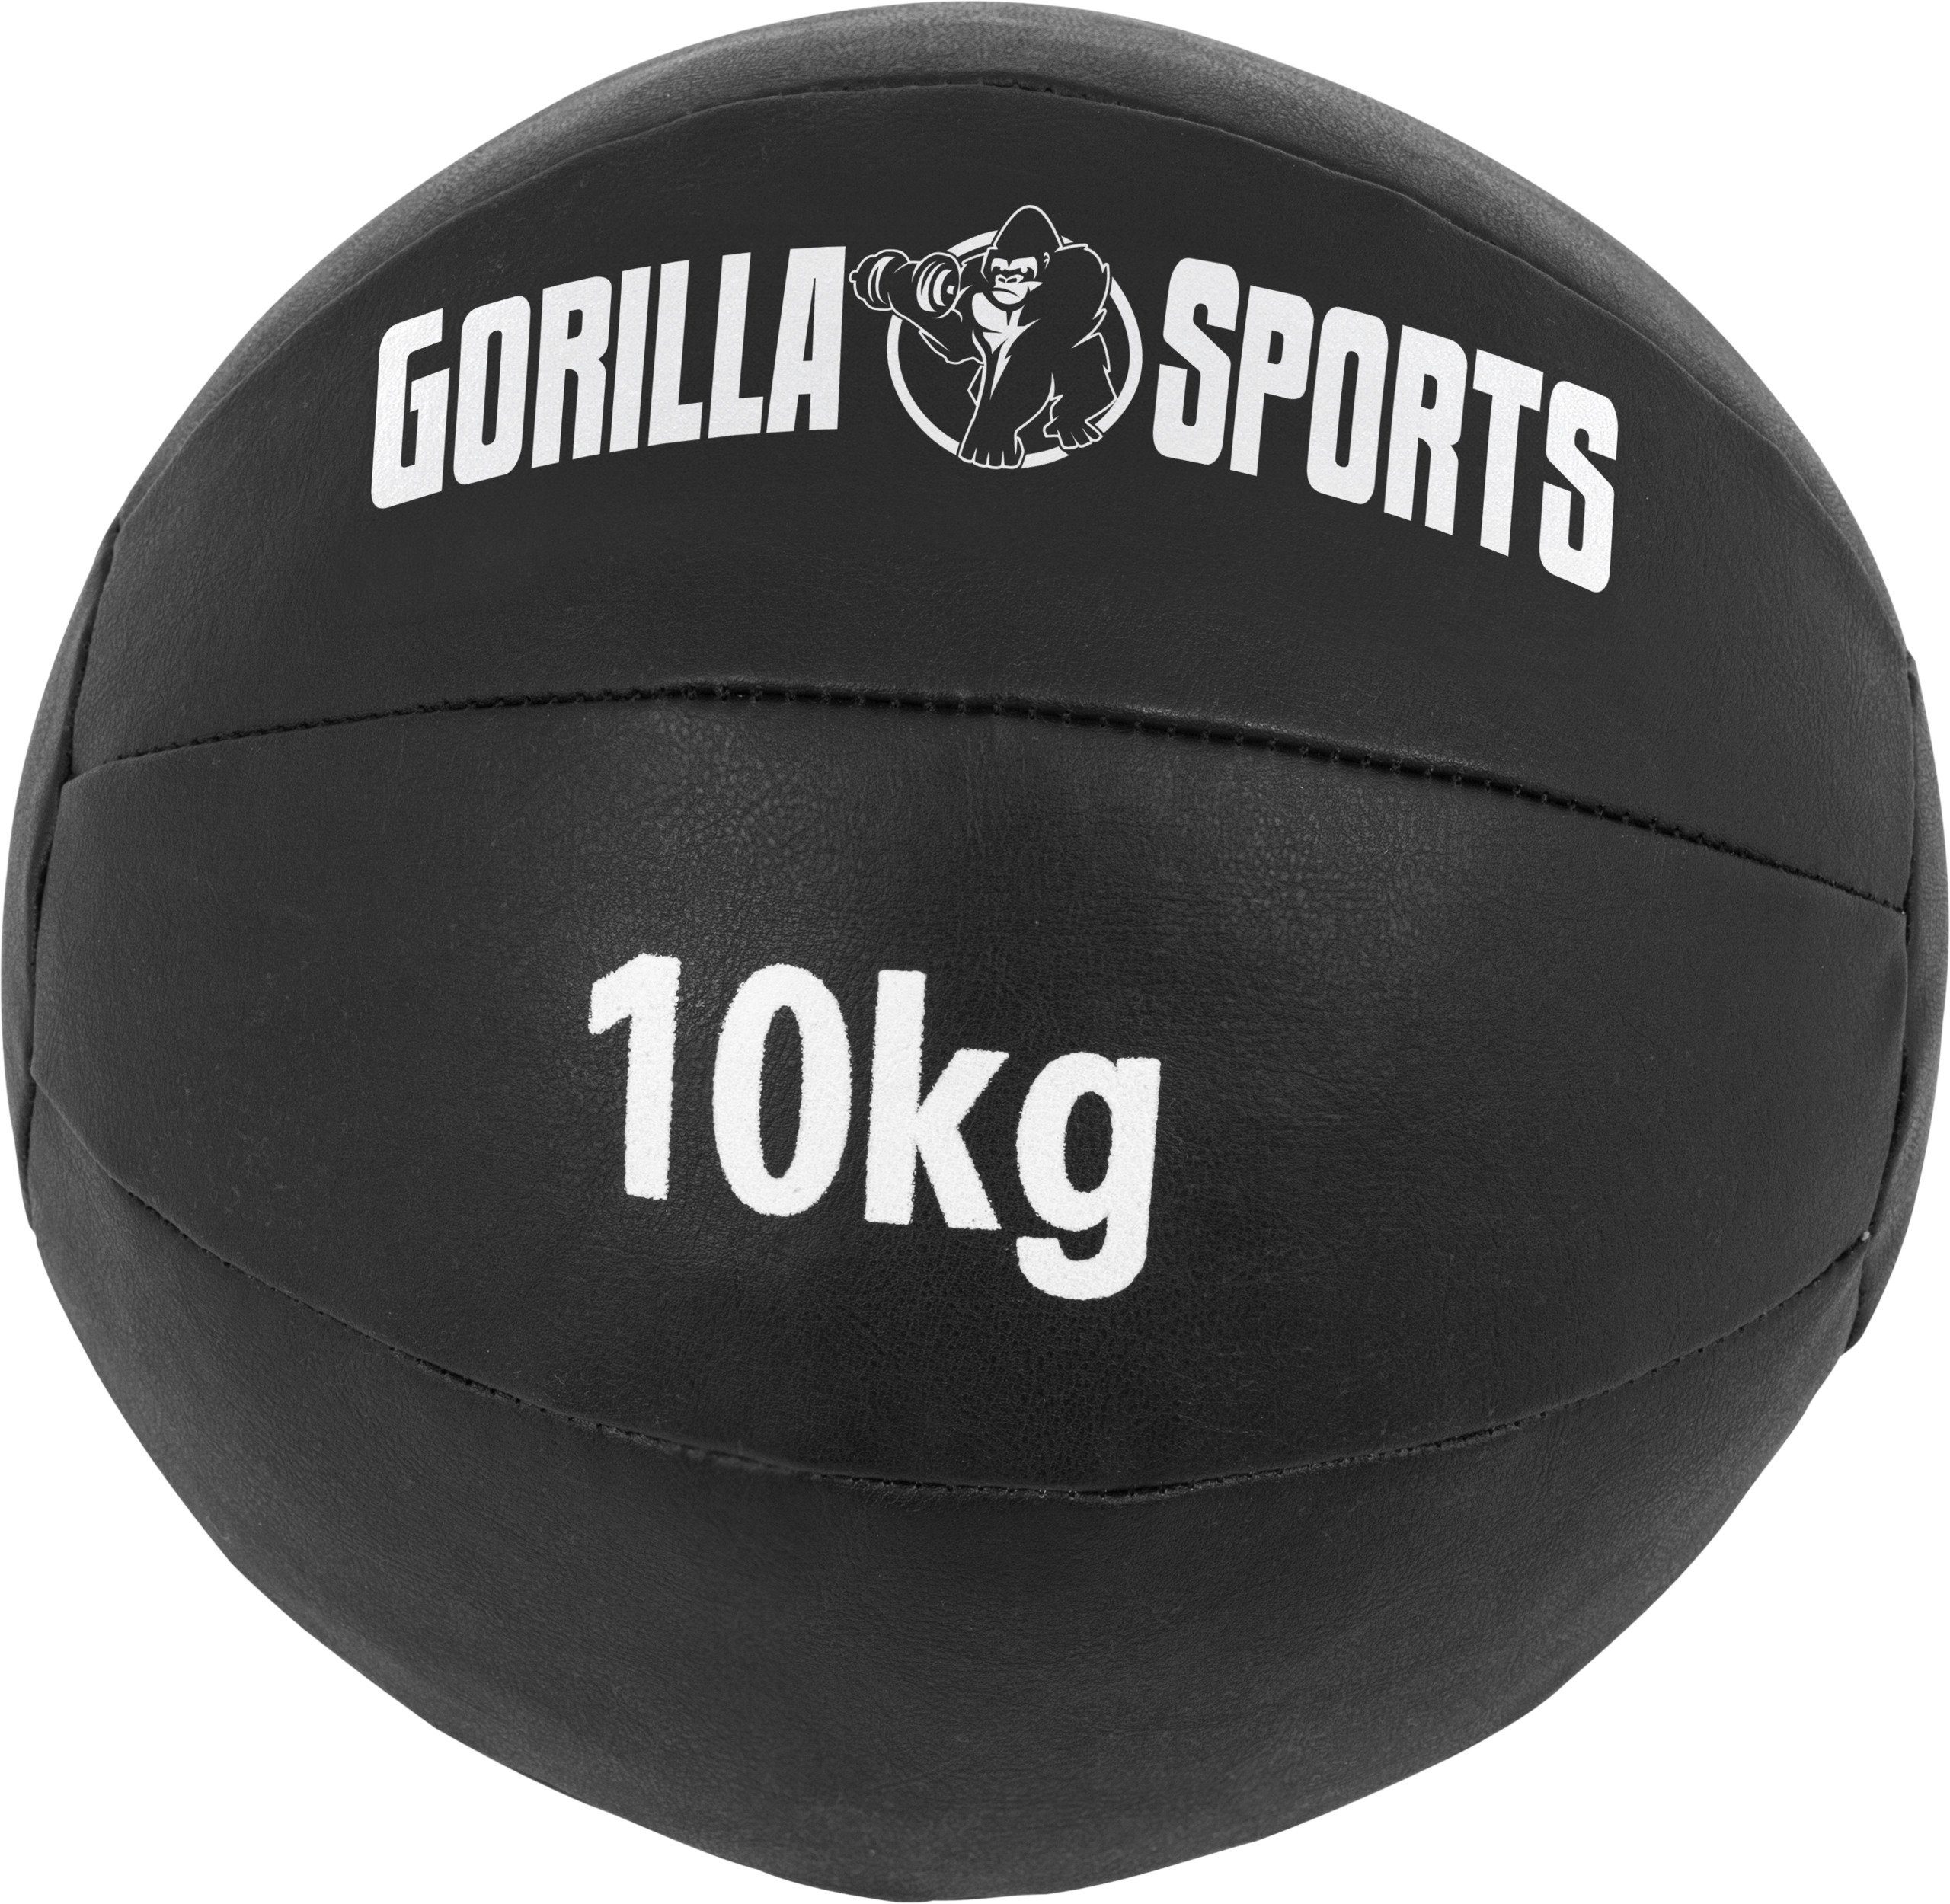 GORILLA SPORTS Medizinball Einzeln/Set, 29cm, aus Leder, Trainingsball, Fitnessball, Gewichtsball 10 kg